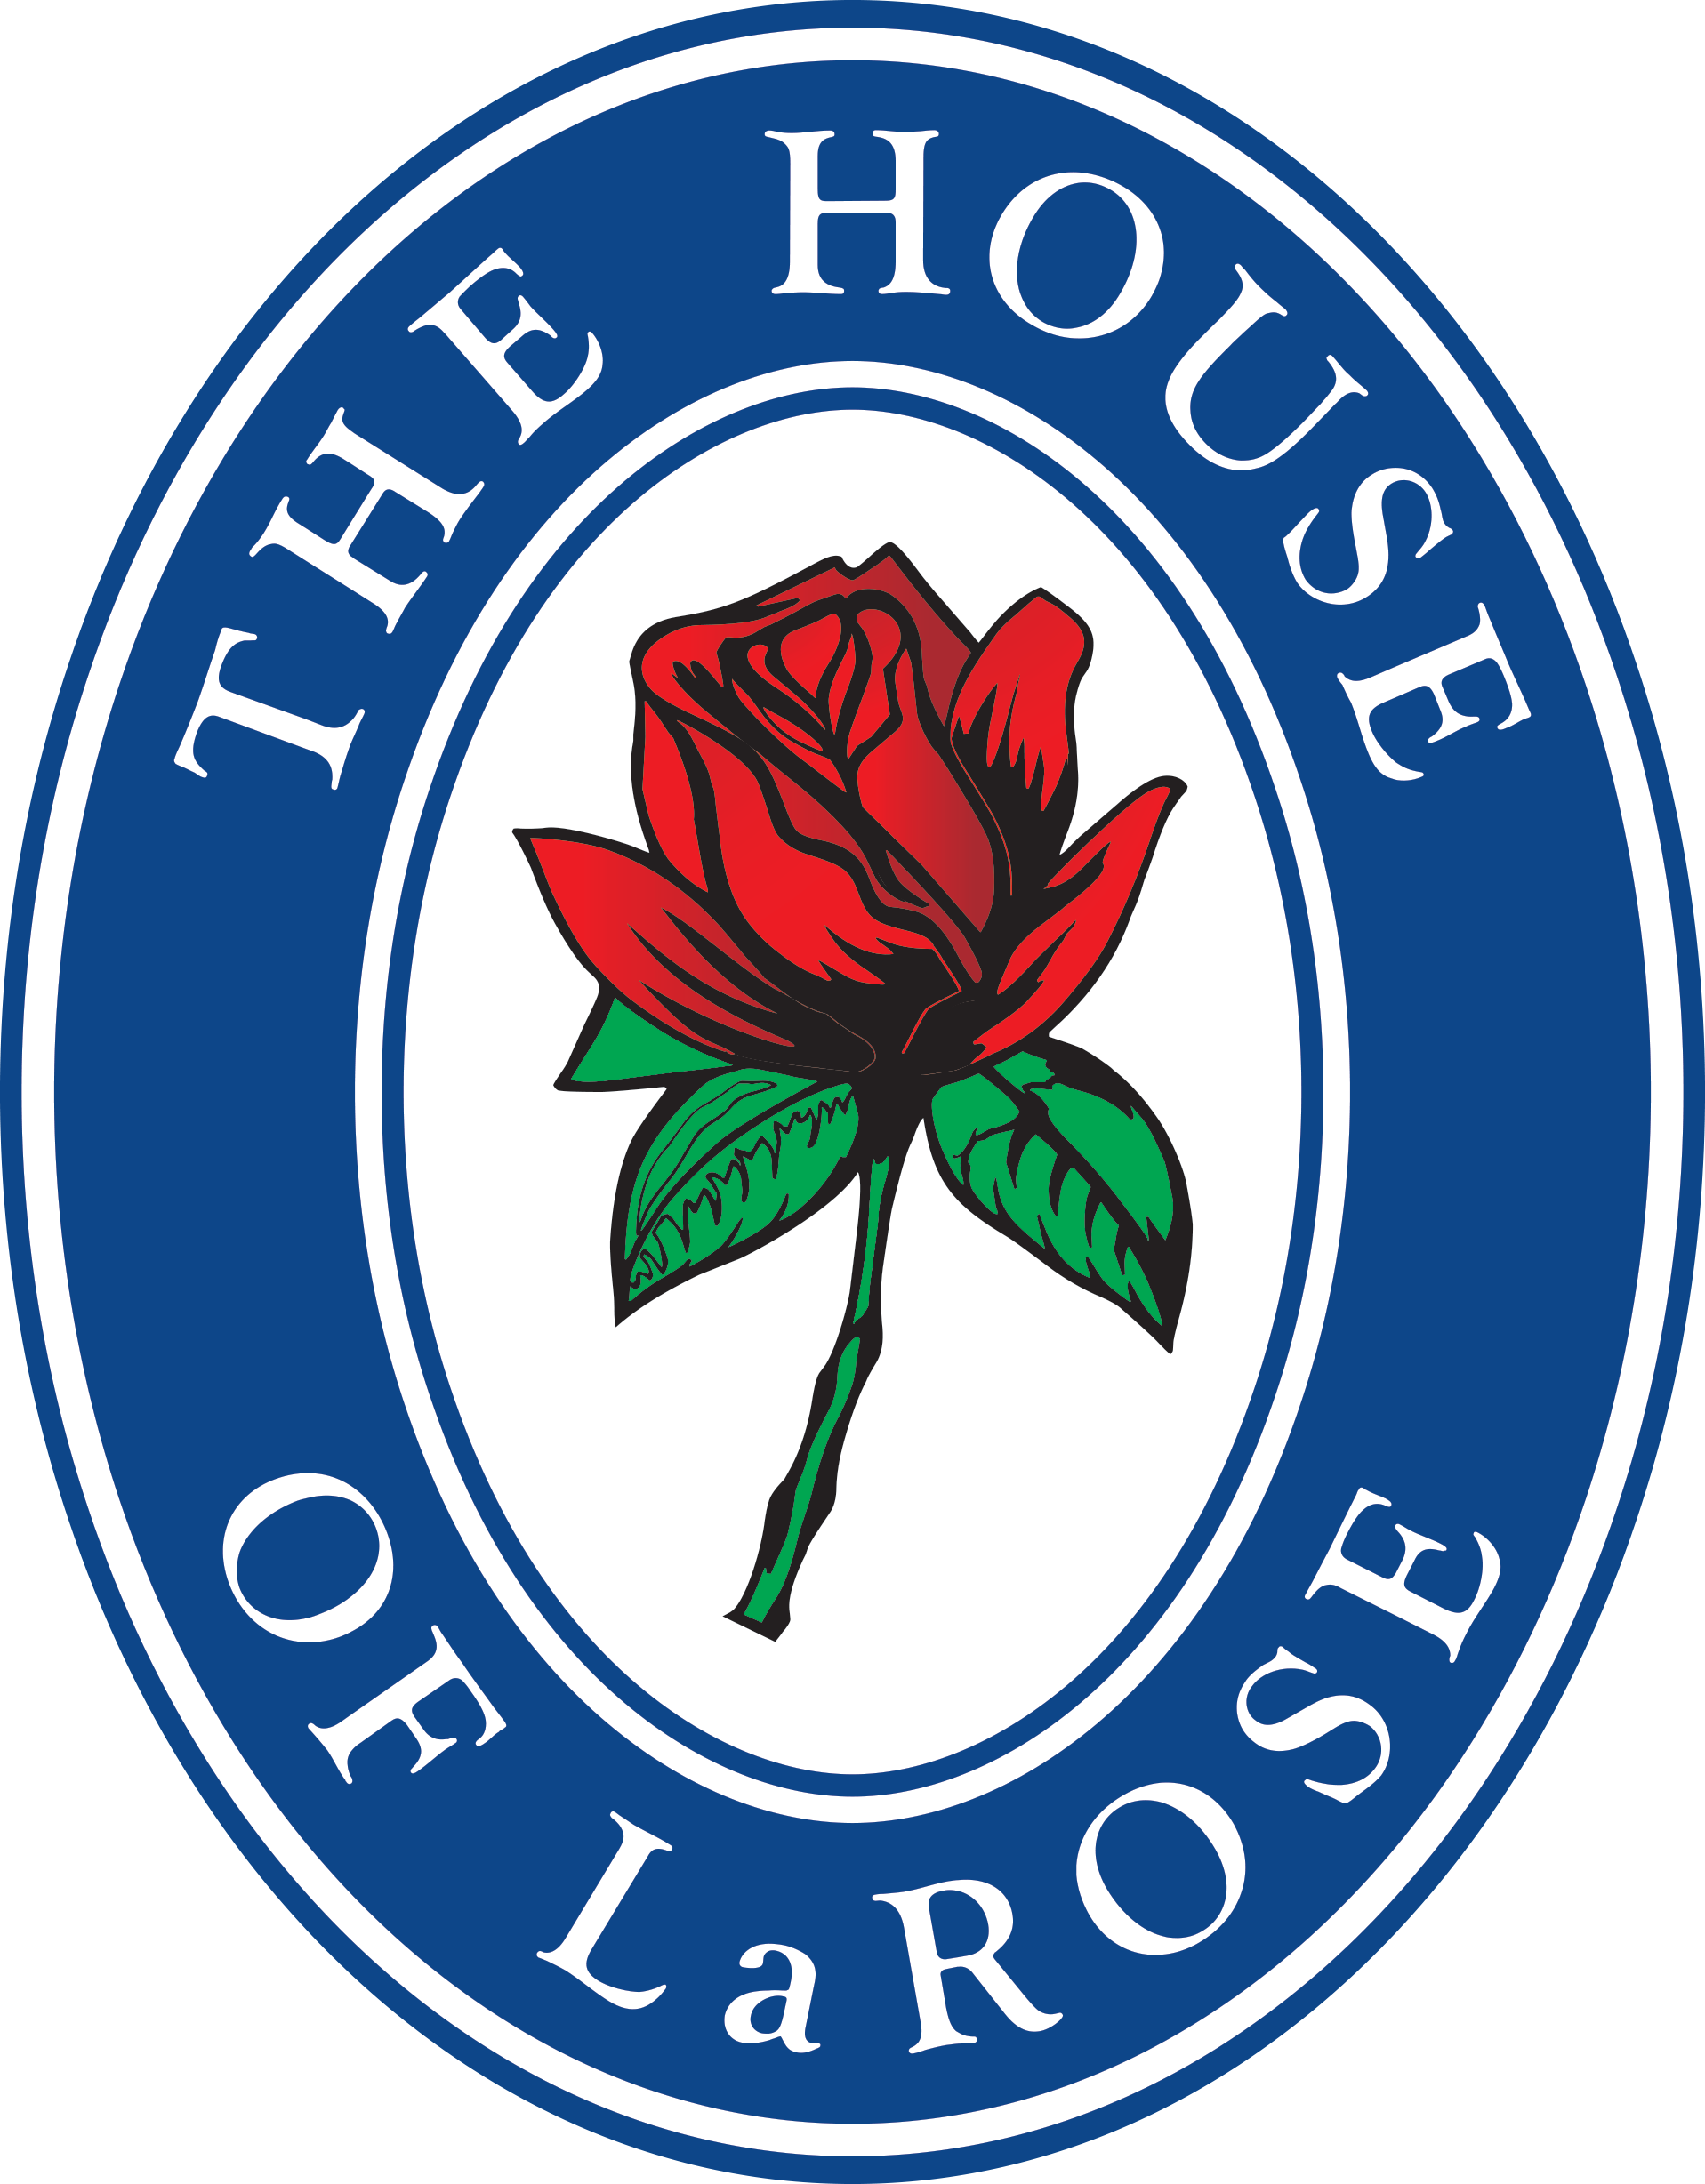 C. House of LaRose (Tier 3)